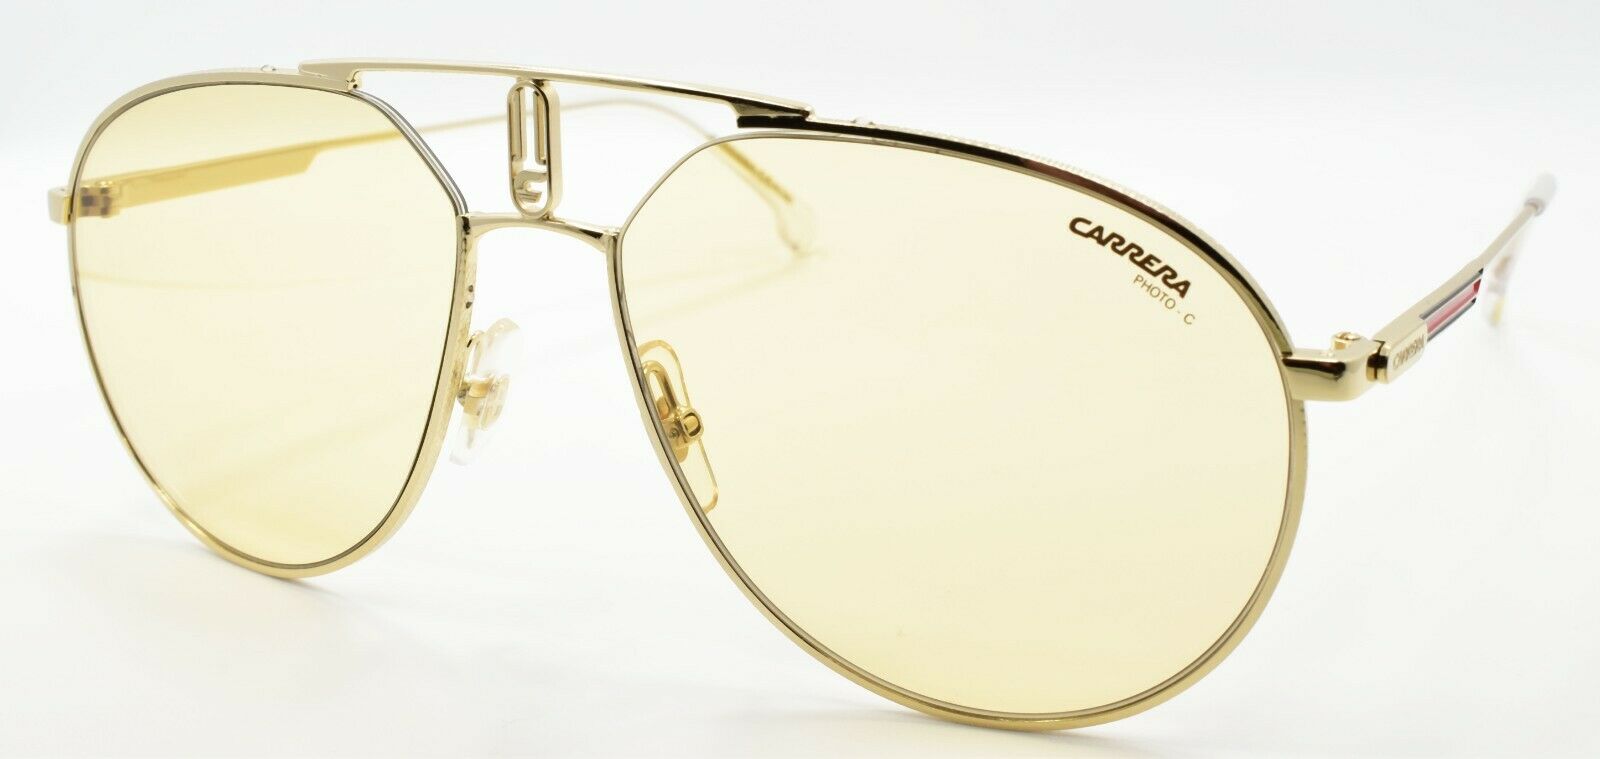 1-Carrera 1025/S DYG Sunglasses Aviator 59-17-145 Gold / Yellow Photochromic-716736202457-IKSpecs